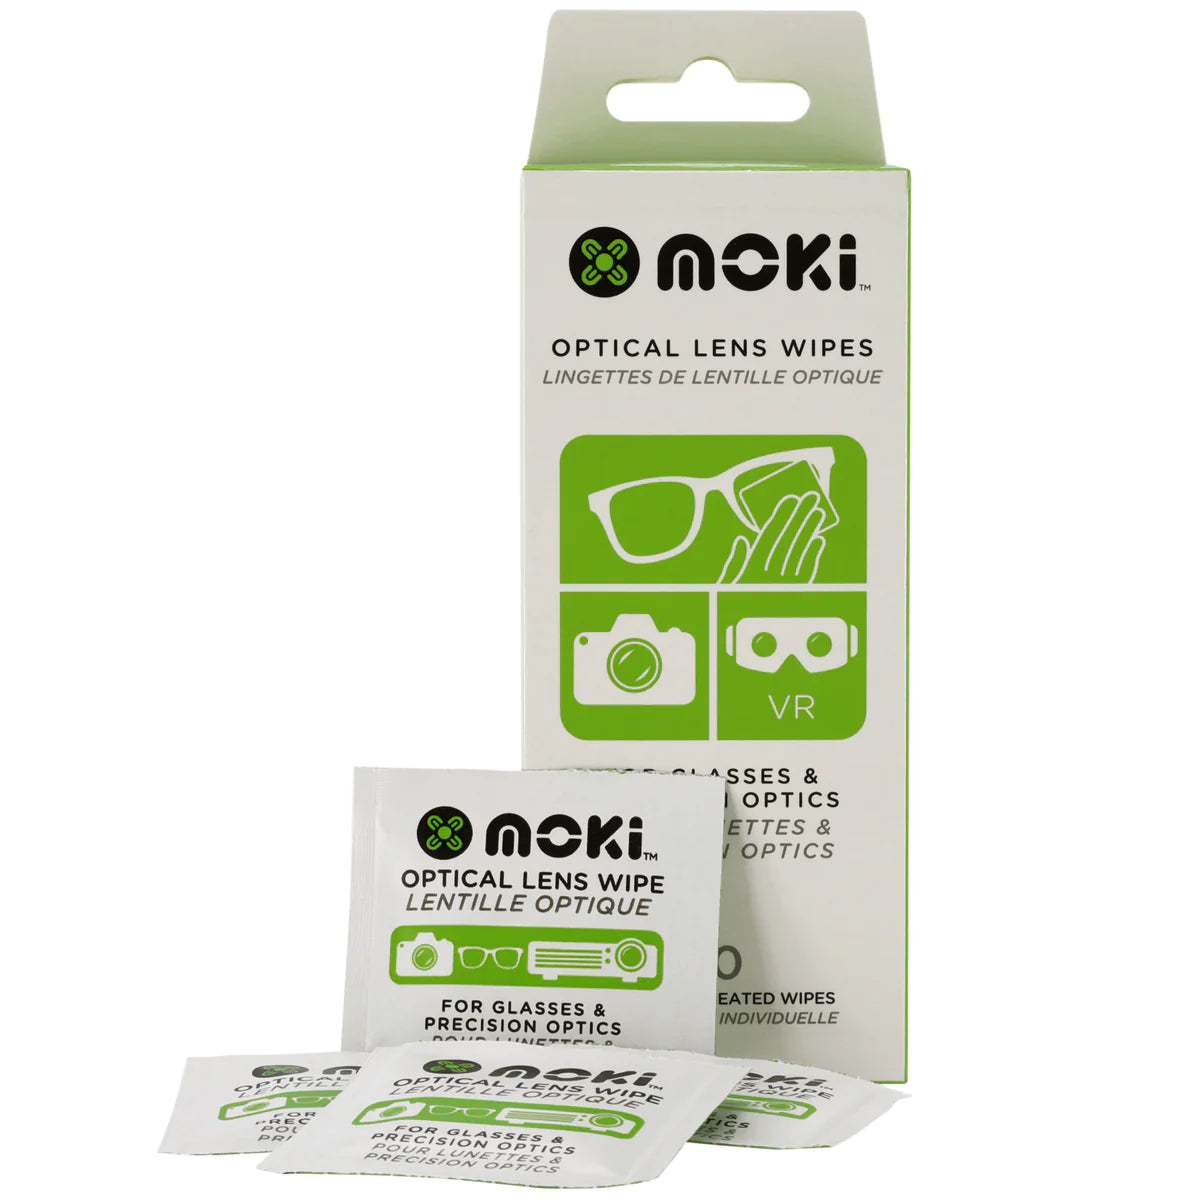 Moki Optical Lens Wipes 40 pack